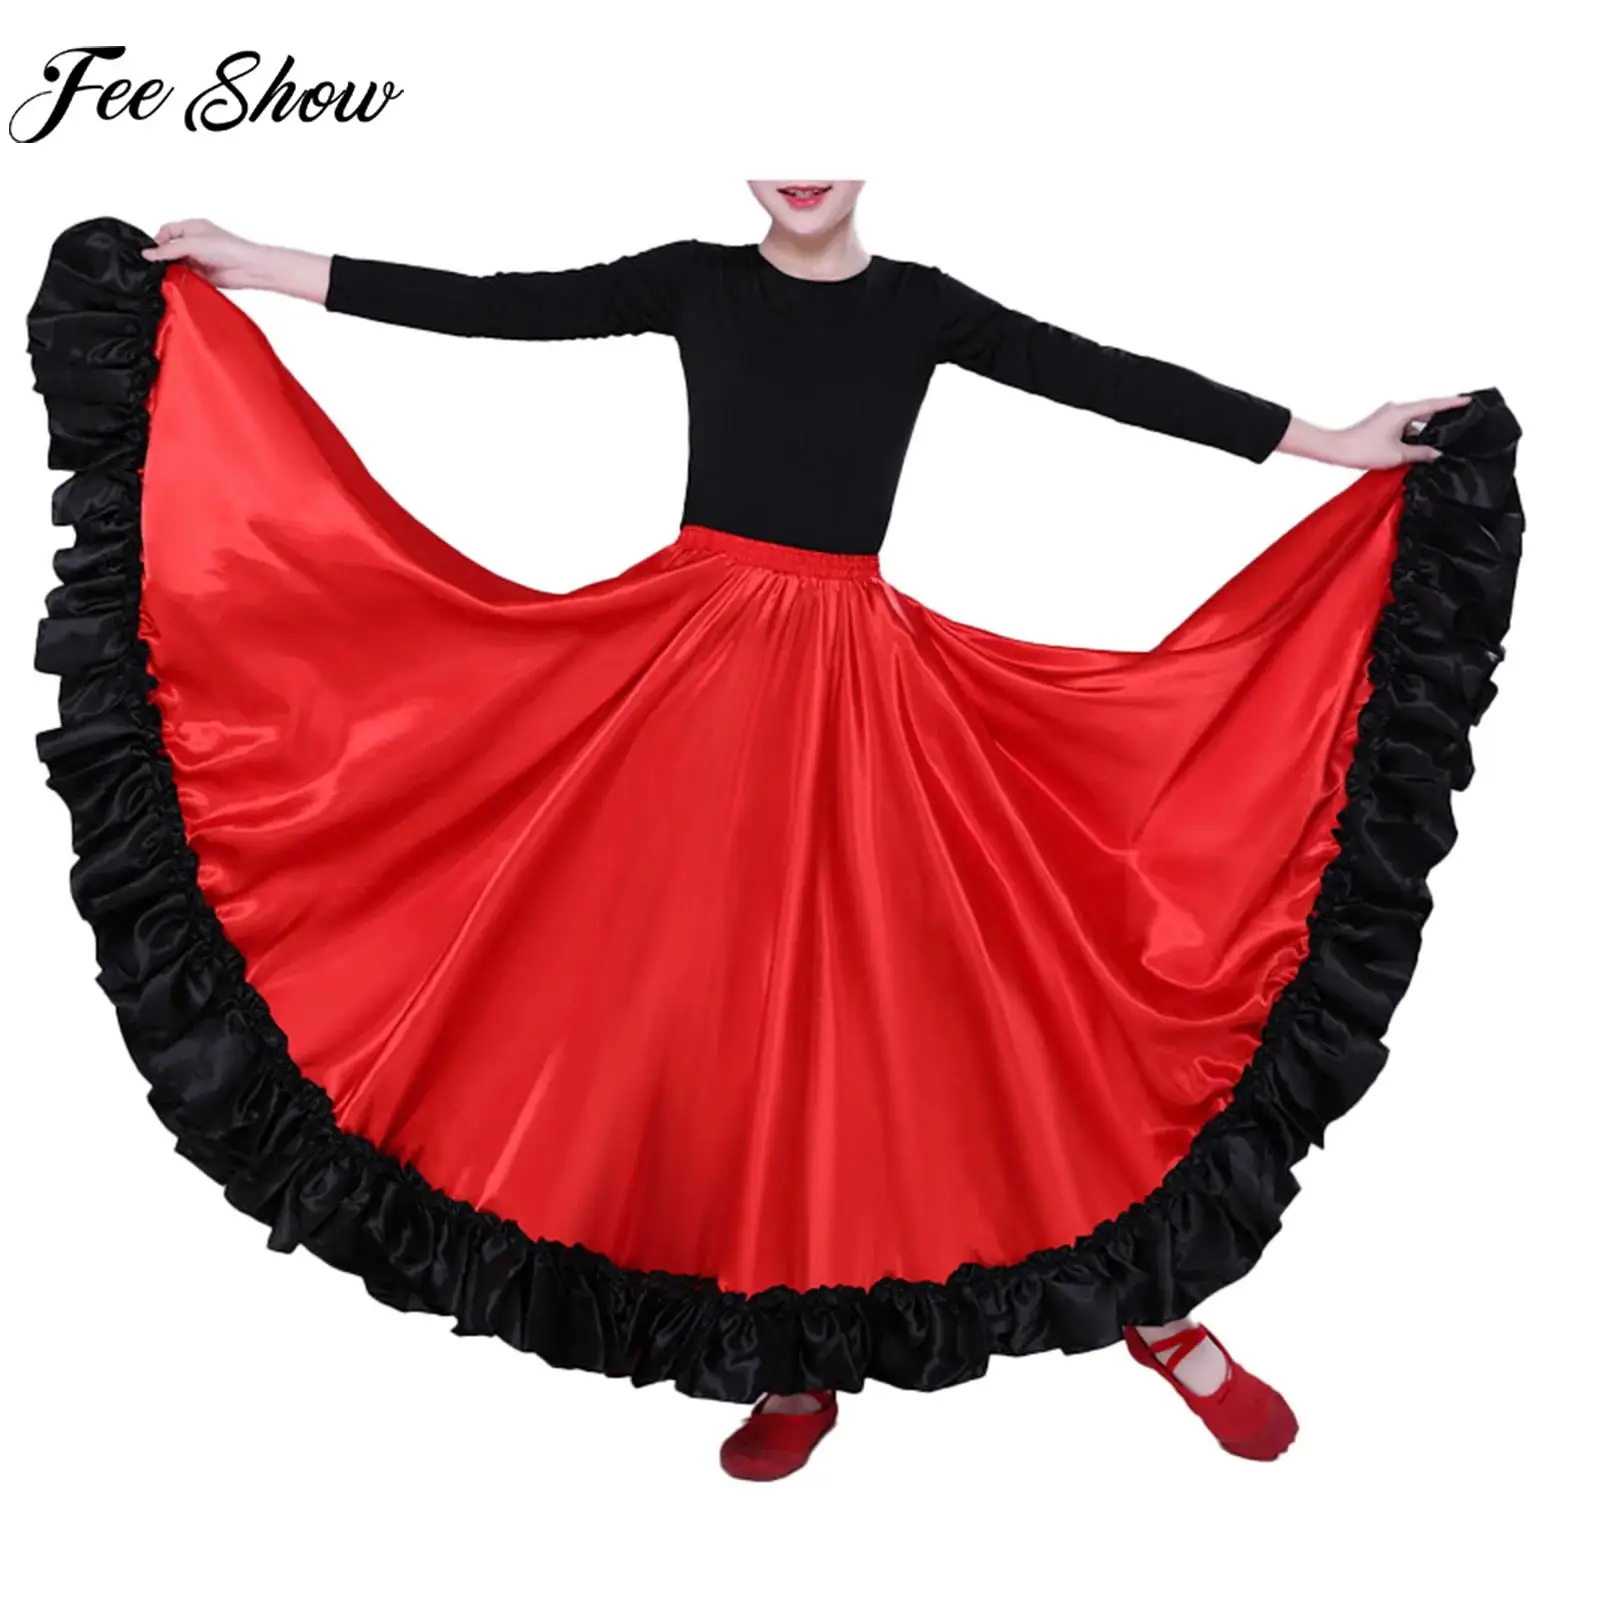 

Teen Girls Spanish Paso Doble Flamenco Tango Latin Ballroom Dance Skirt Big Swing Ruffled Hem Dancewear for Stage Performance